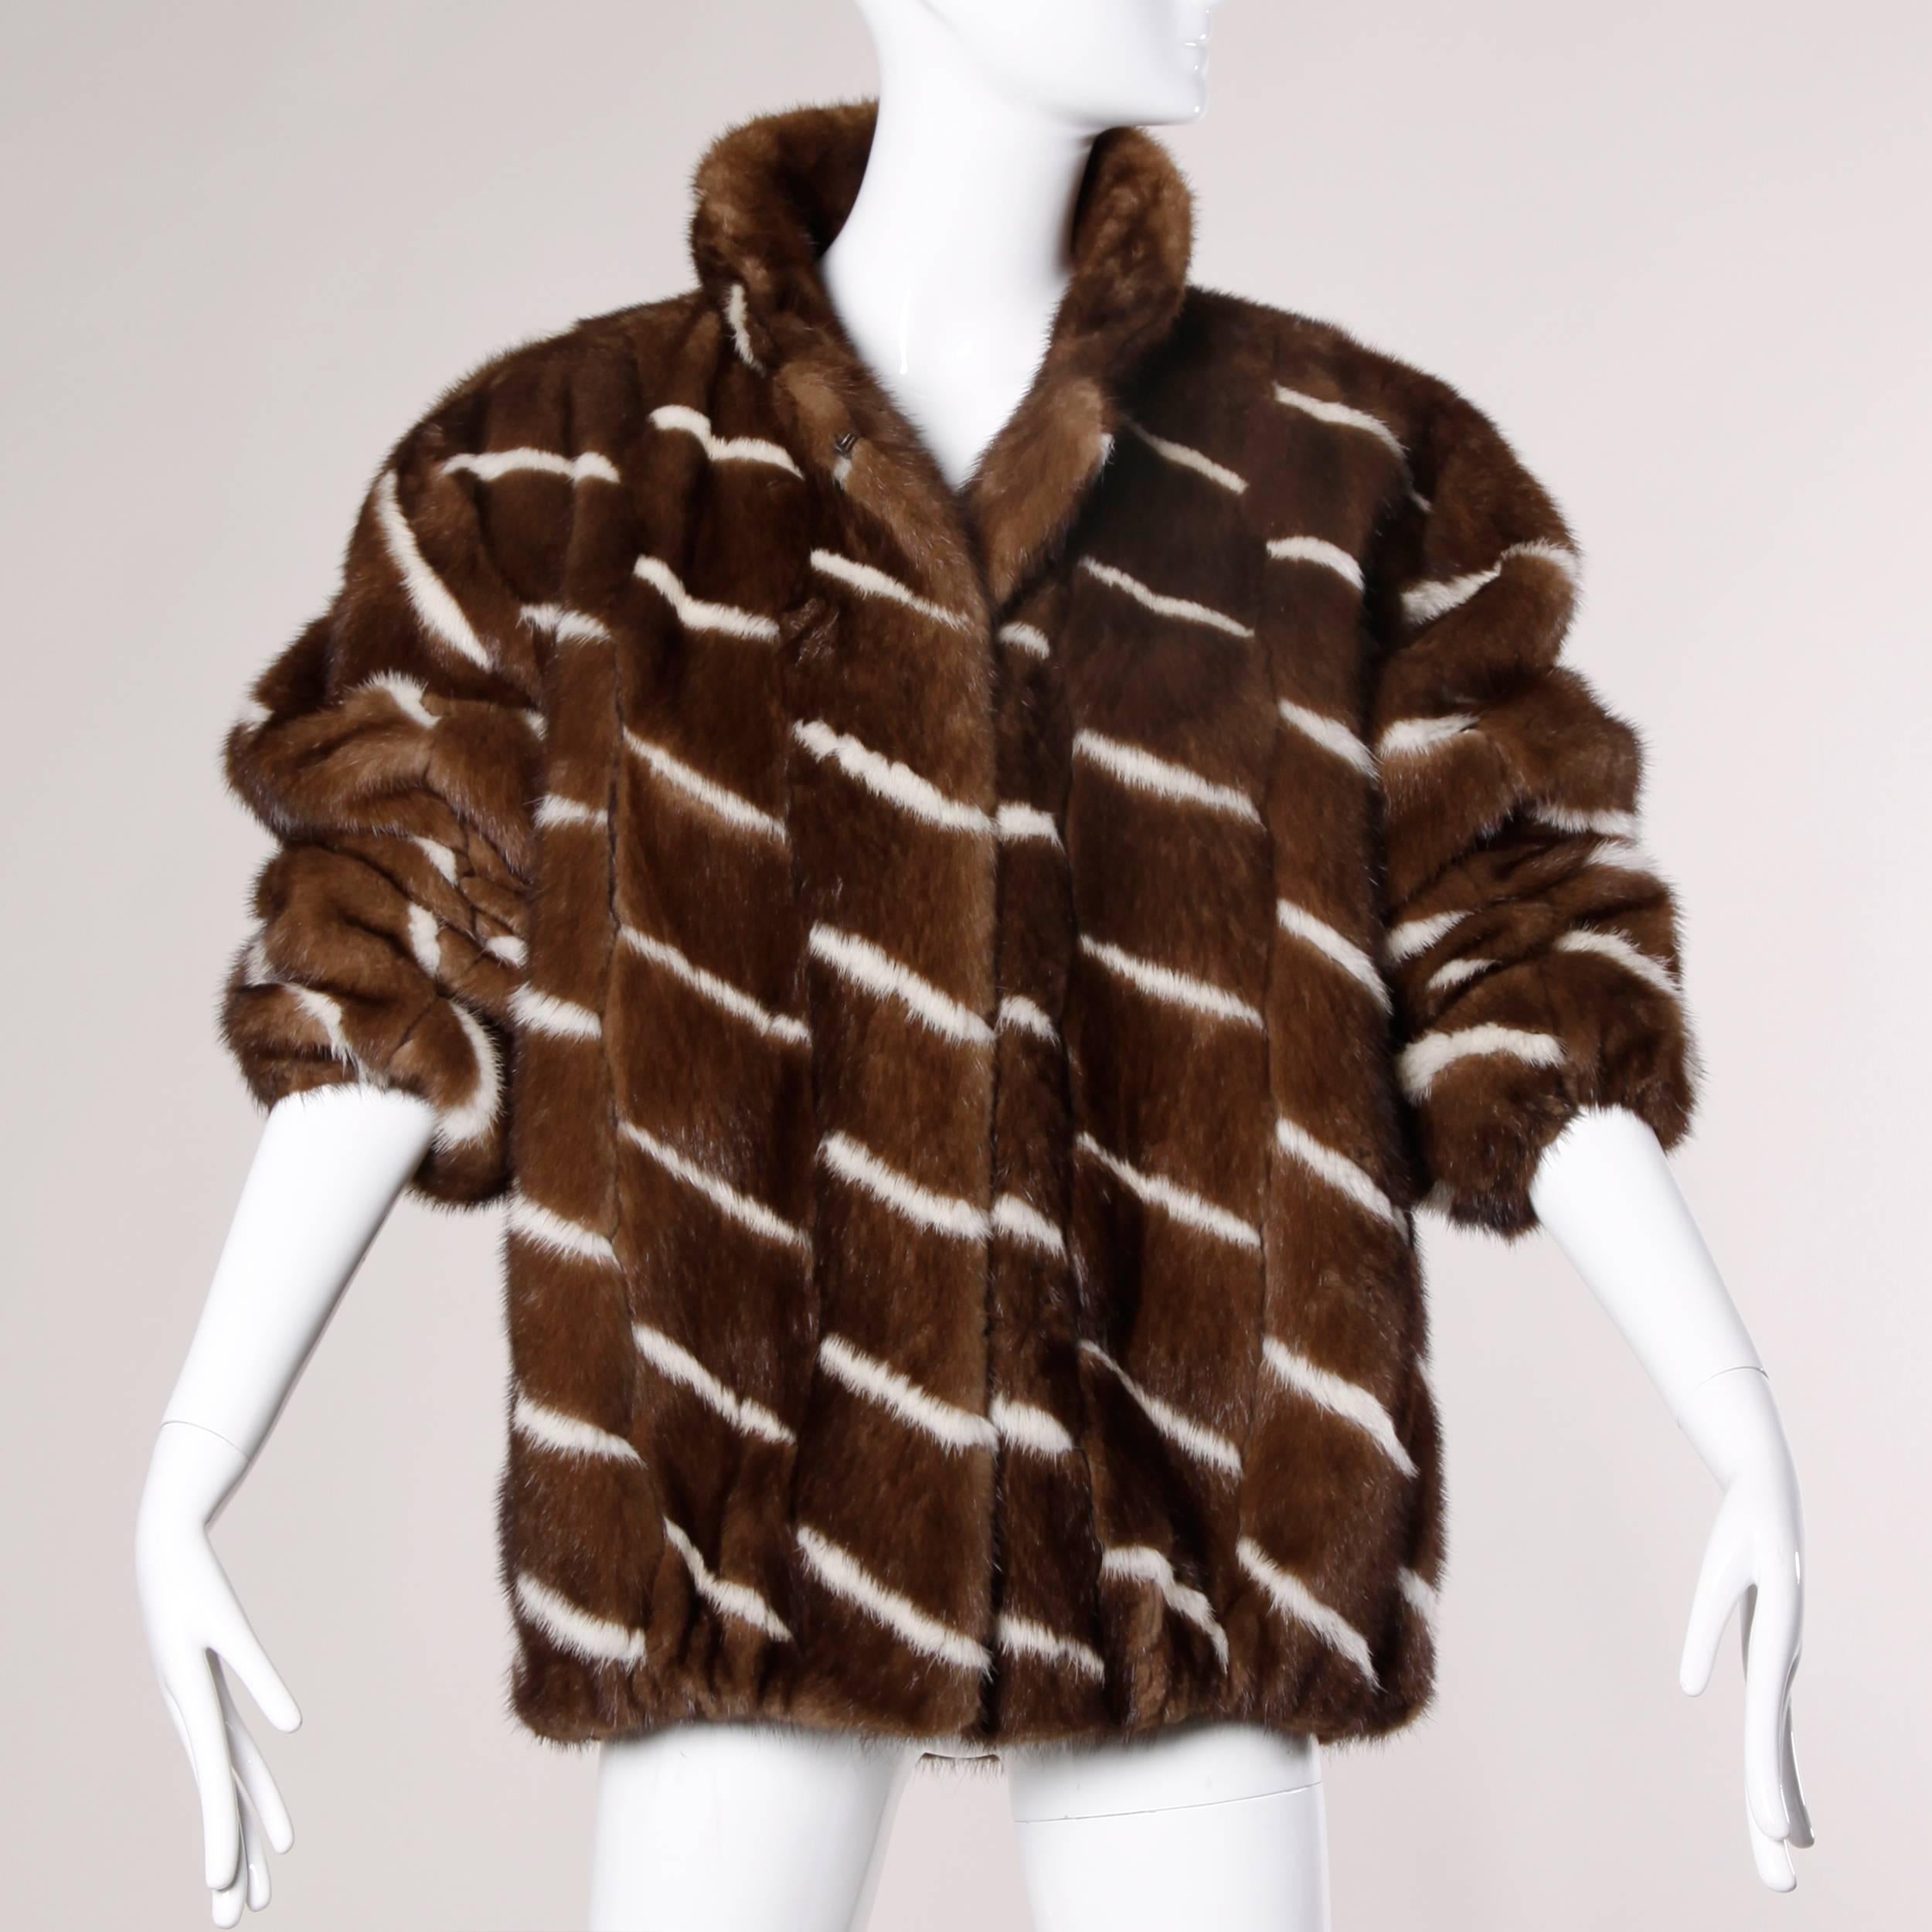 Black Vintage Brown + White Striped Mink Fur Jacket with Leather Lining